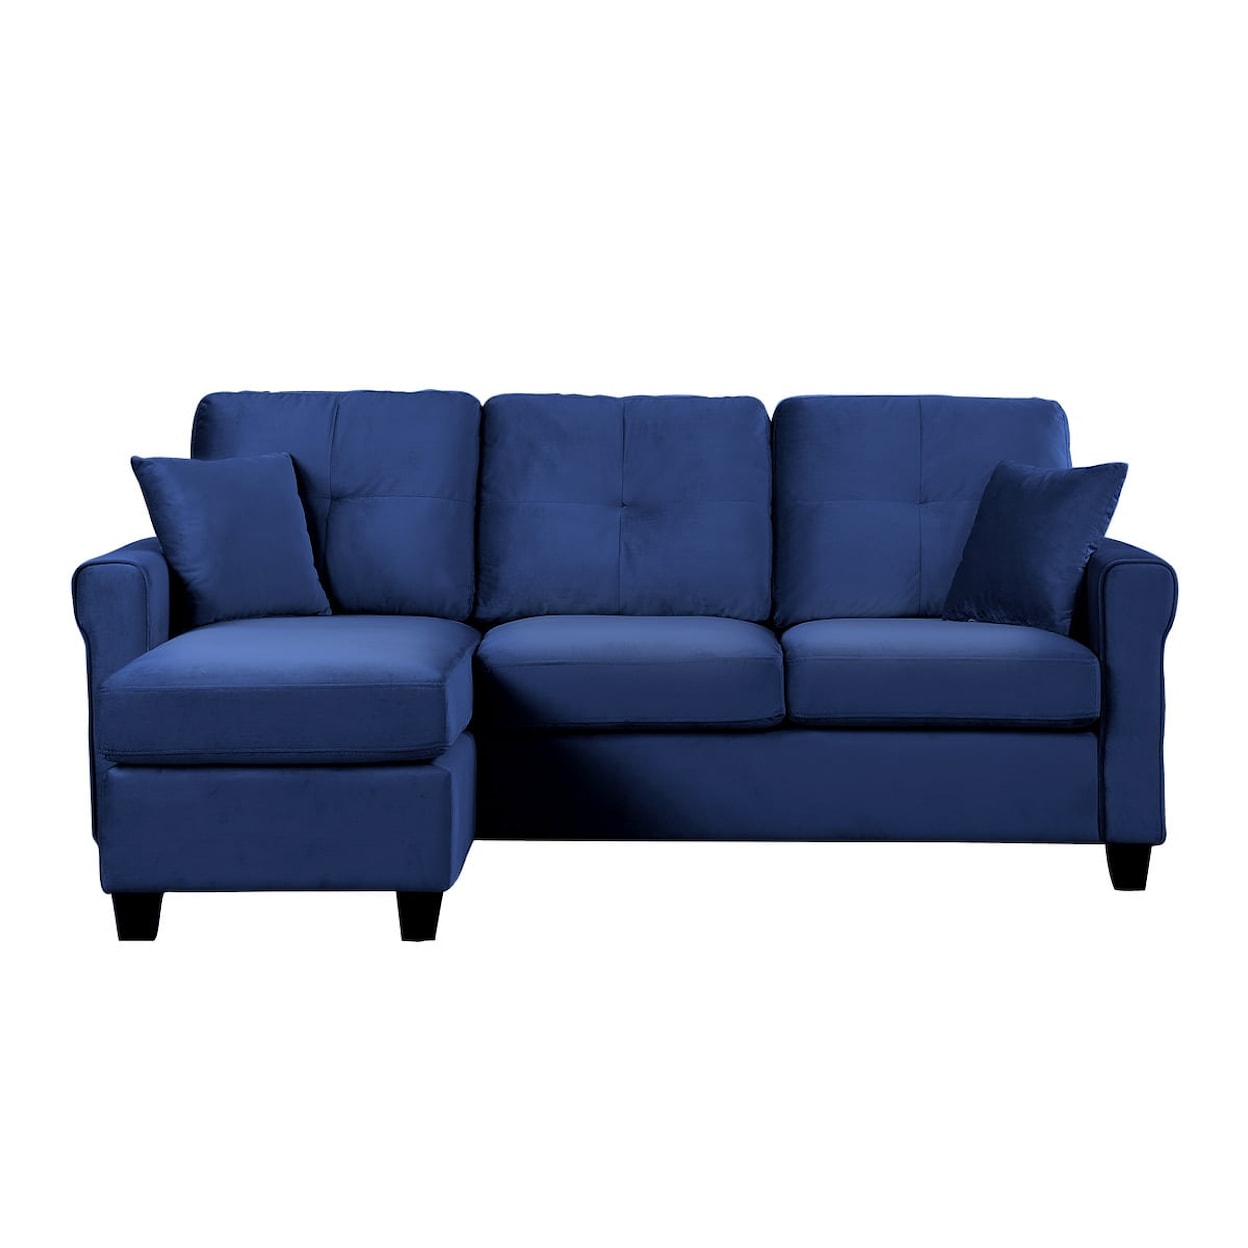 Homelegance Monty Reversible Sofa Chaise